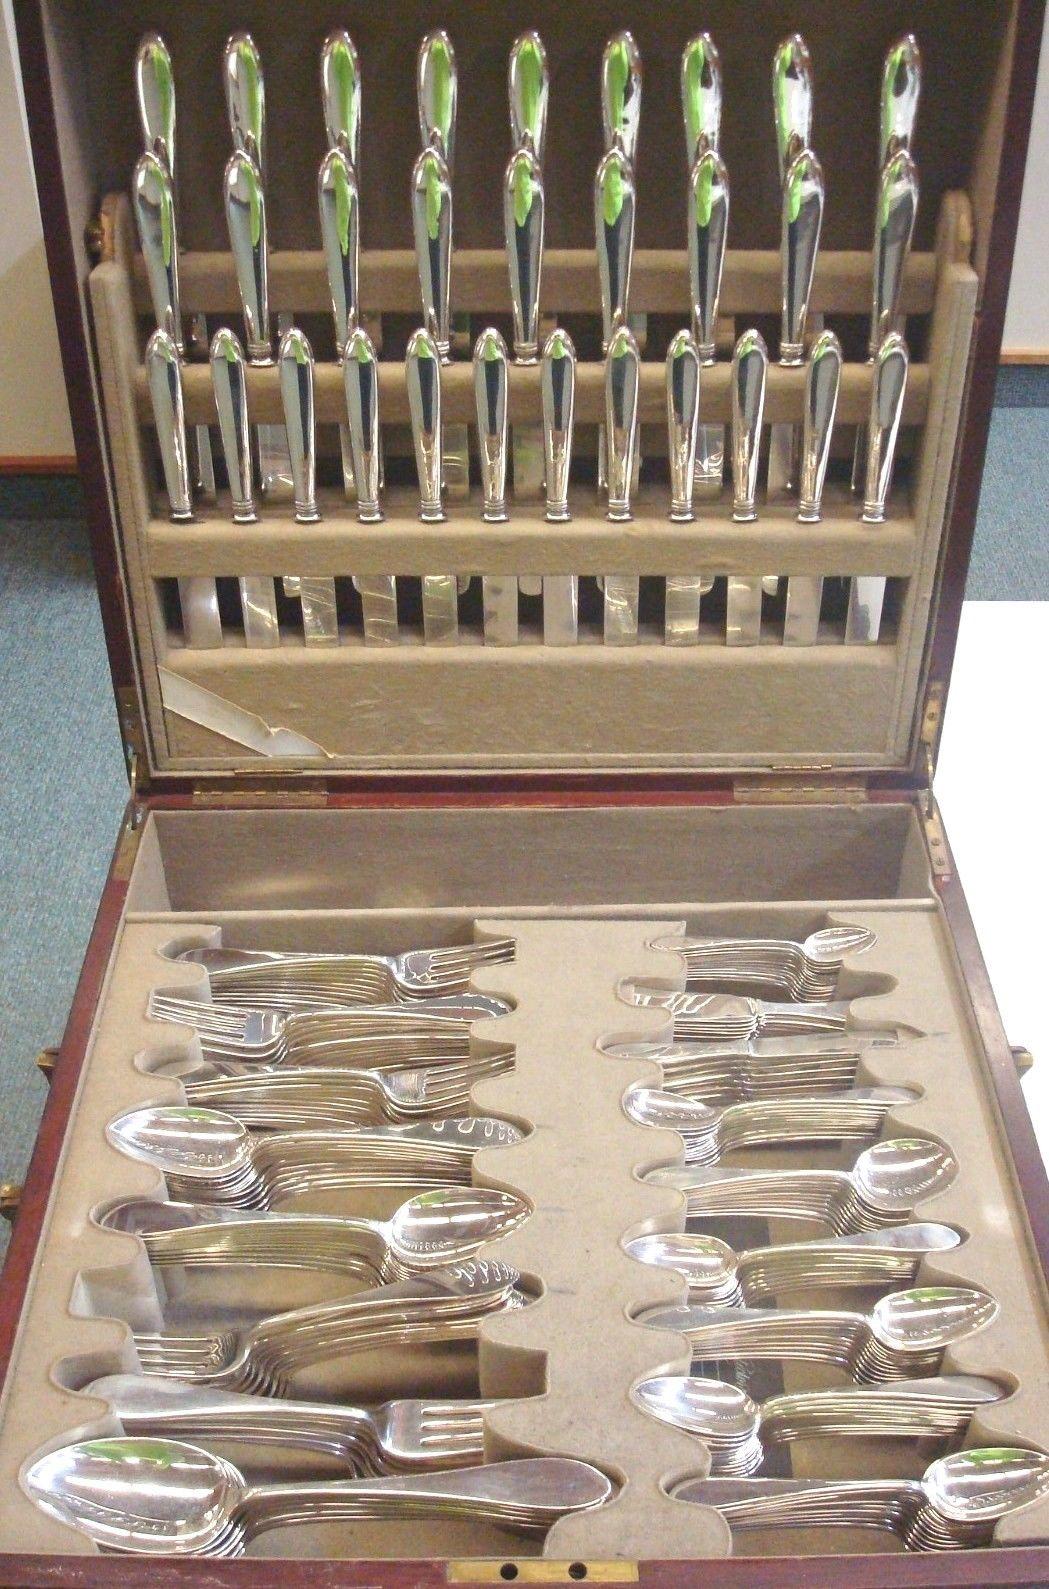 Monumental Pointed End by AJ Stone circa 1906 handmade sterling silver flatware set of 218 pieces. Cet ensemble comprend :

18 couteaux de table, 9 1/2
16 fourchettes de taille moyenne, 7 3/4
12 couteaux de table, 8 1/2